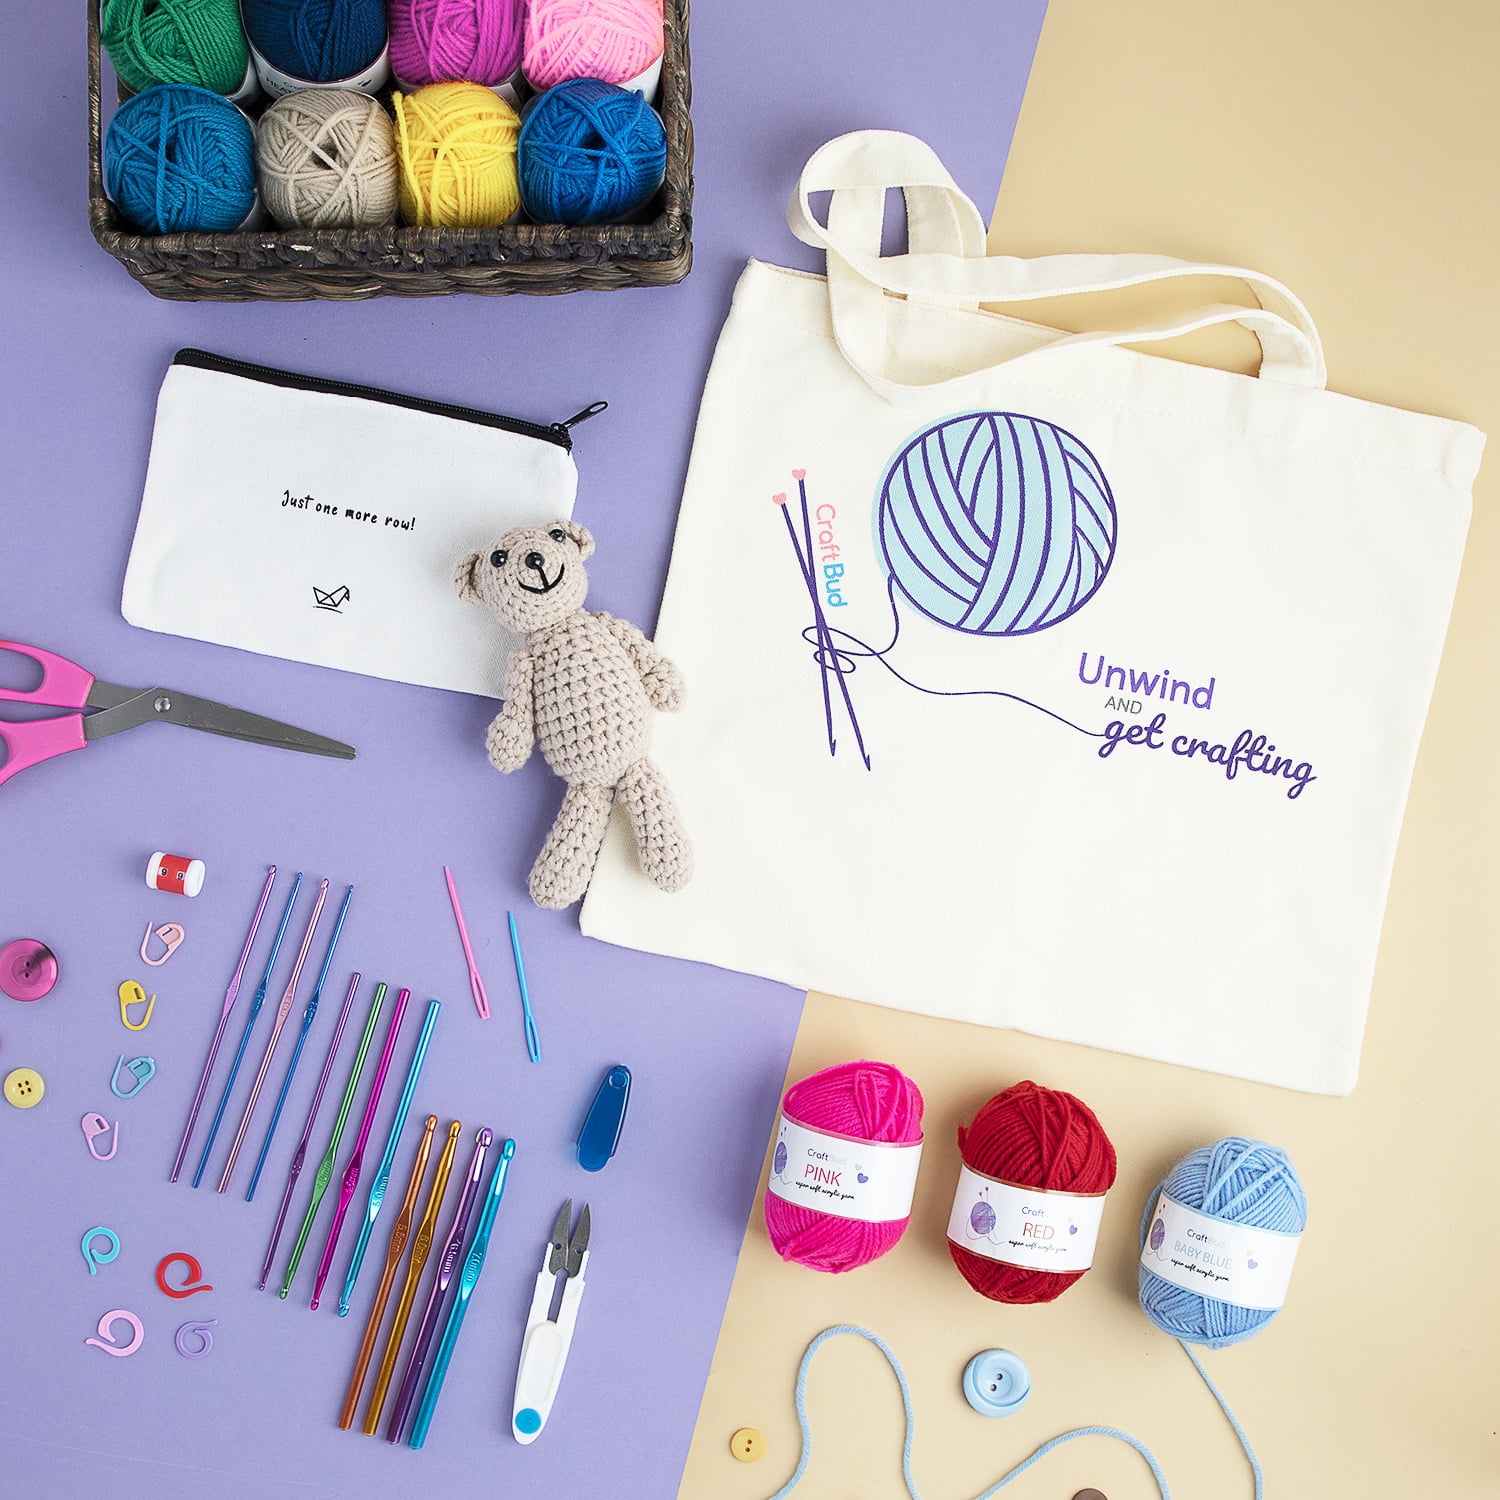  Hearth & Harbor Crochet Kit for Beginners Adults, Kids